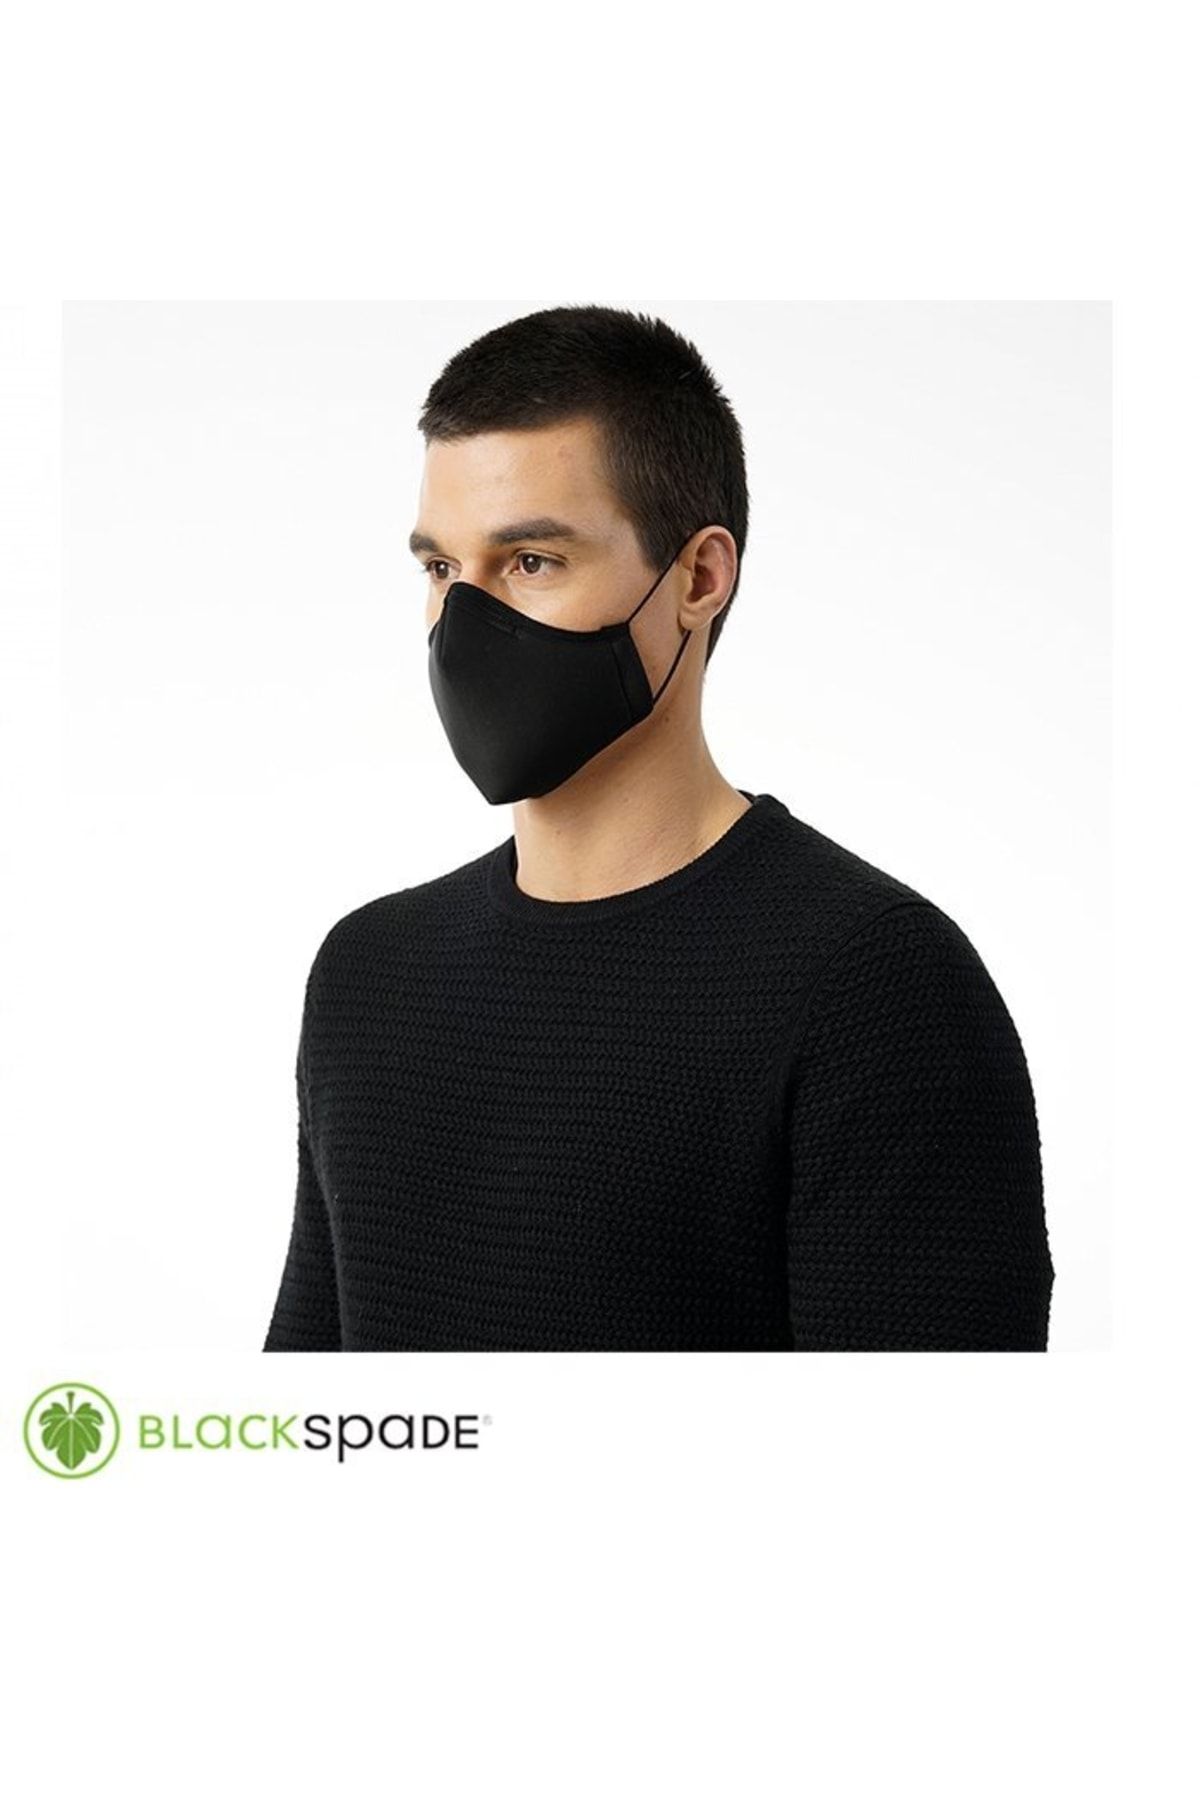 Blackspade Unisex Örme Kumaş Maske Siyah M-Xl